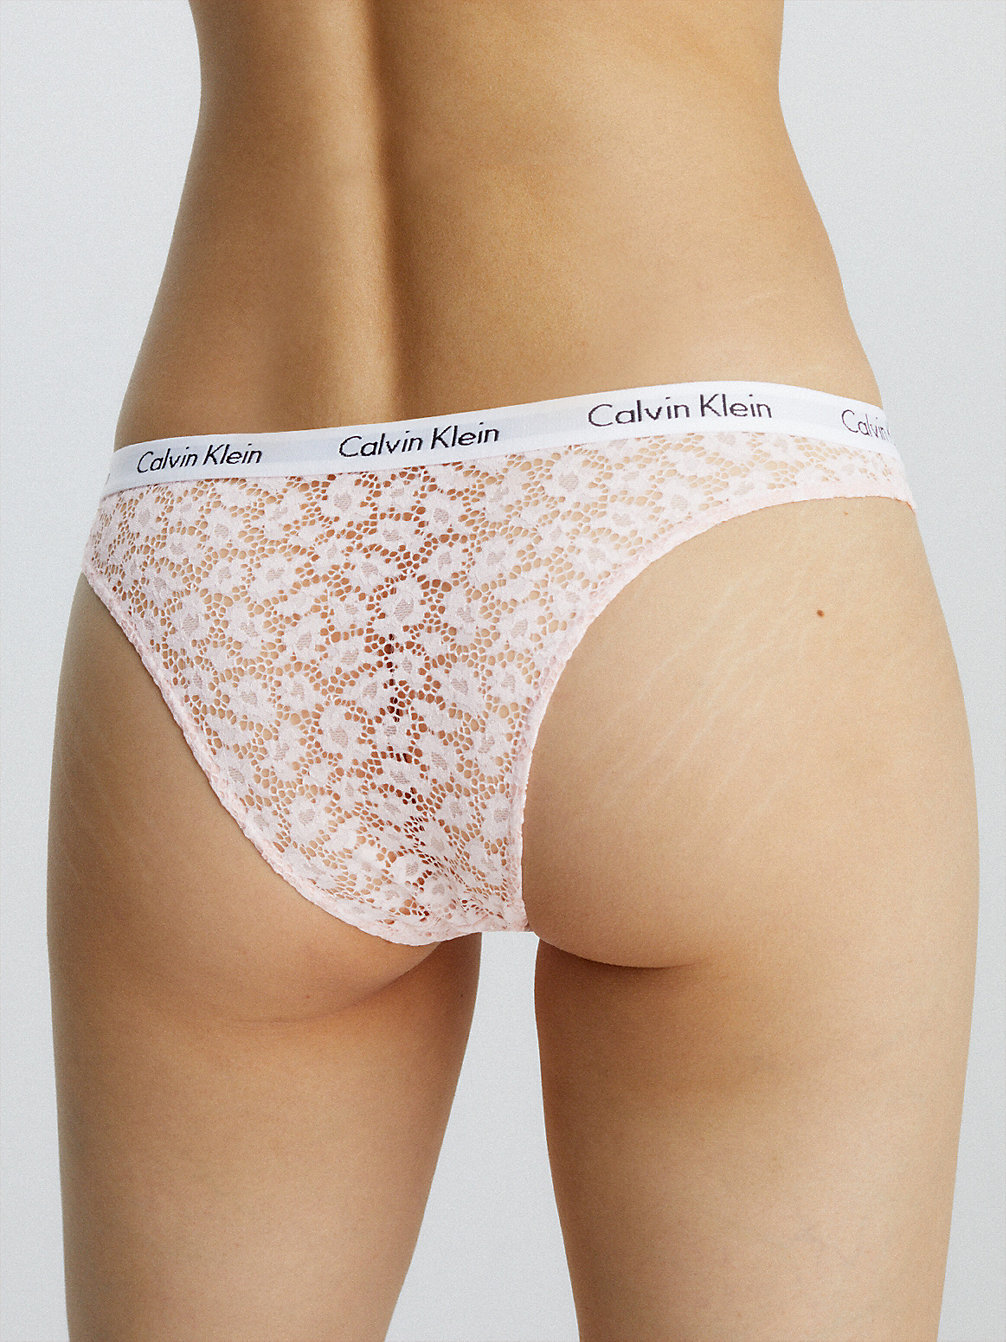 NYMPHS THIGH Slip Brasiliani - Carousel undefined donna Calvin Klein